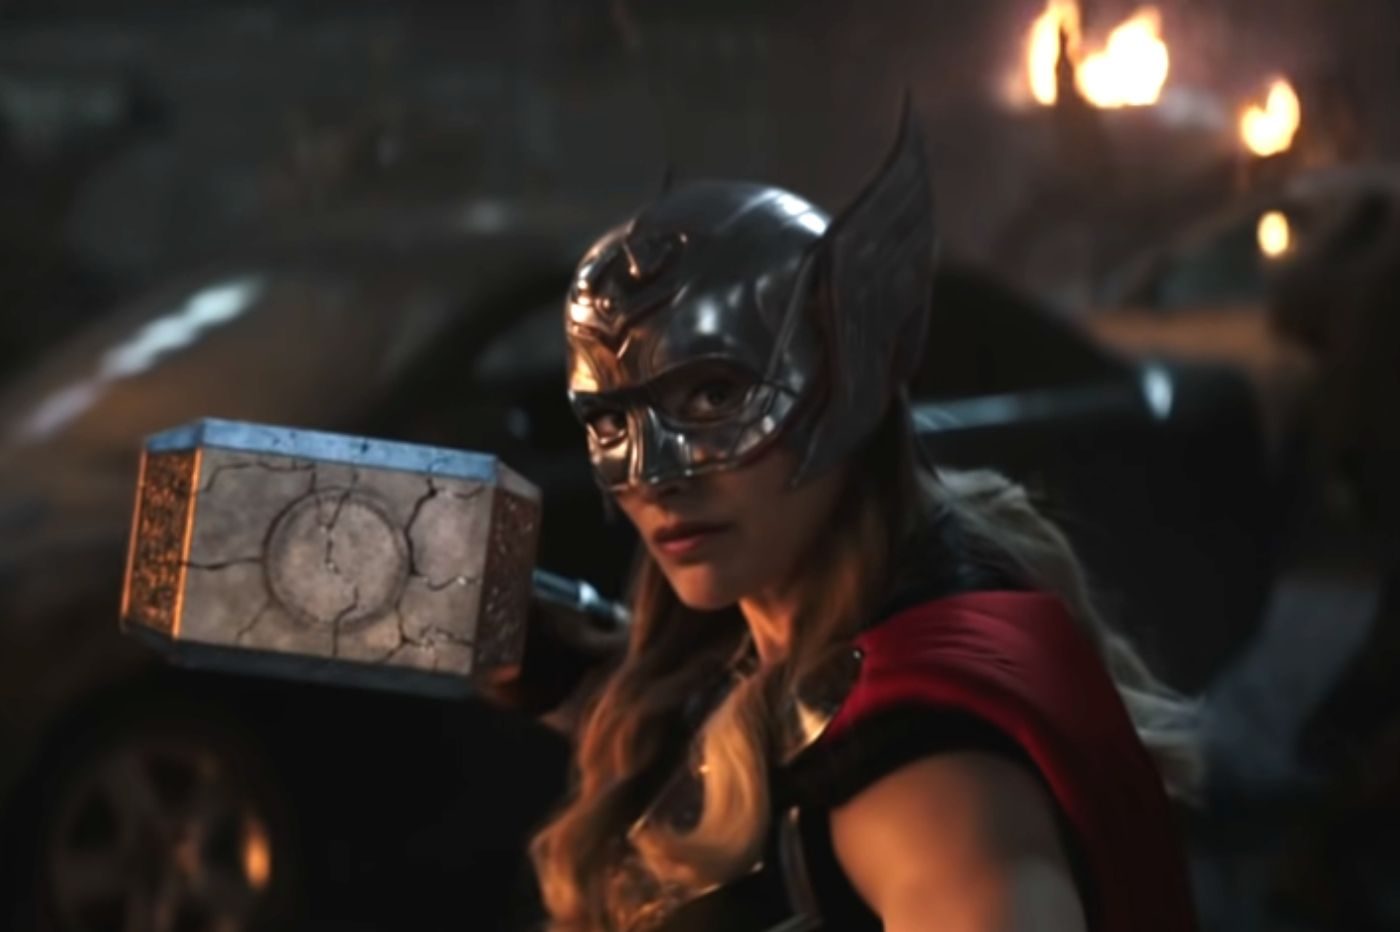 Natalie Portman in Thor 4 